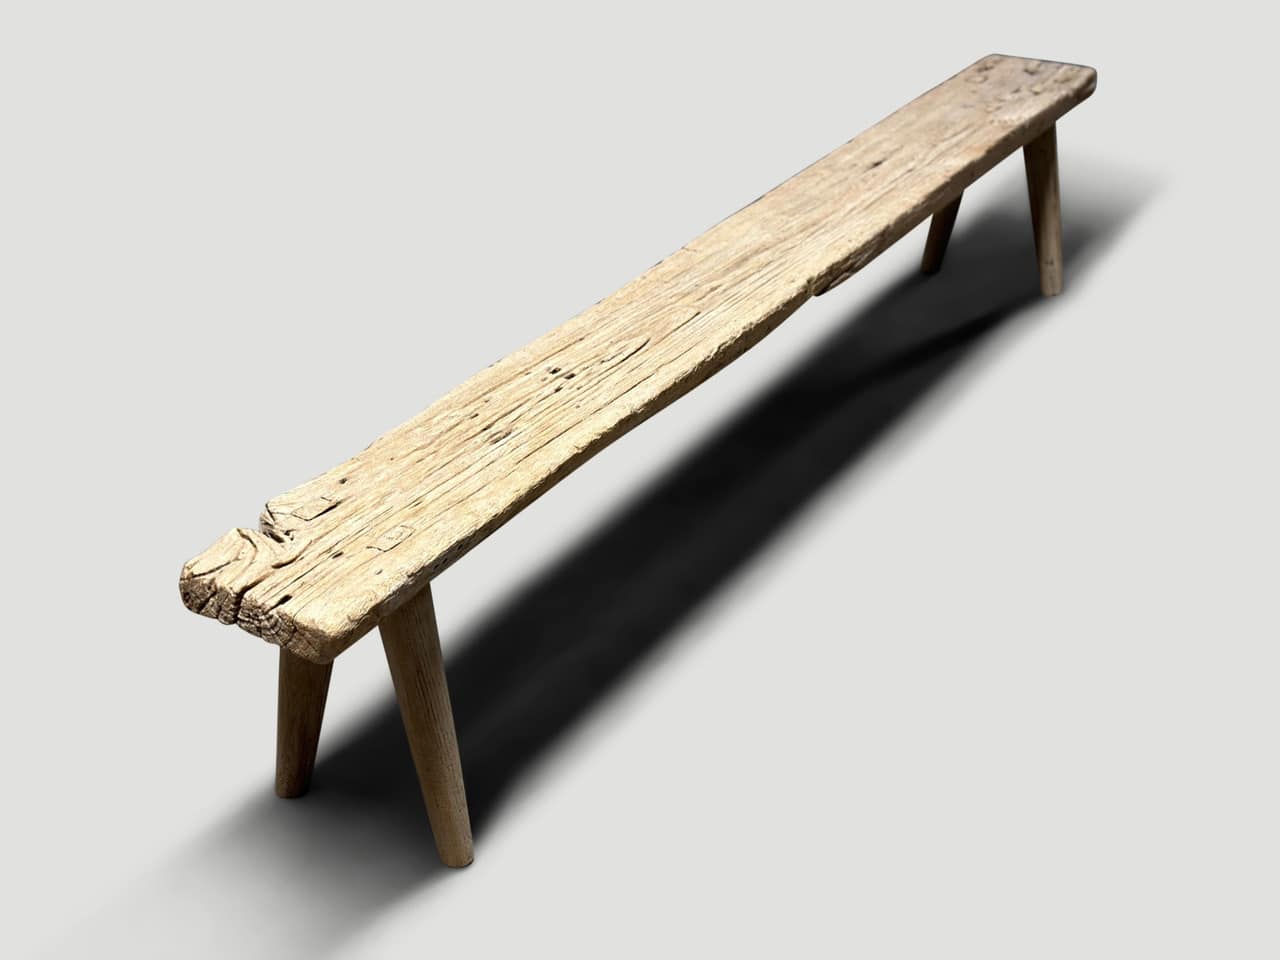 wabi sabi teak wood bench